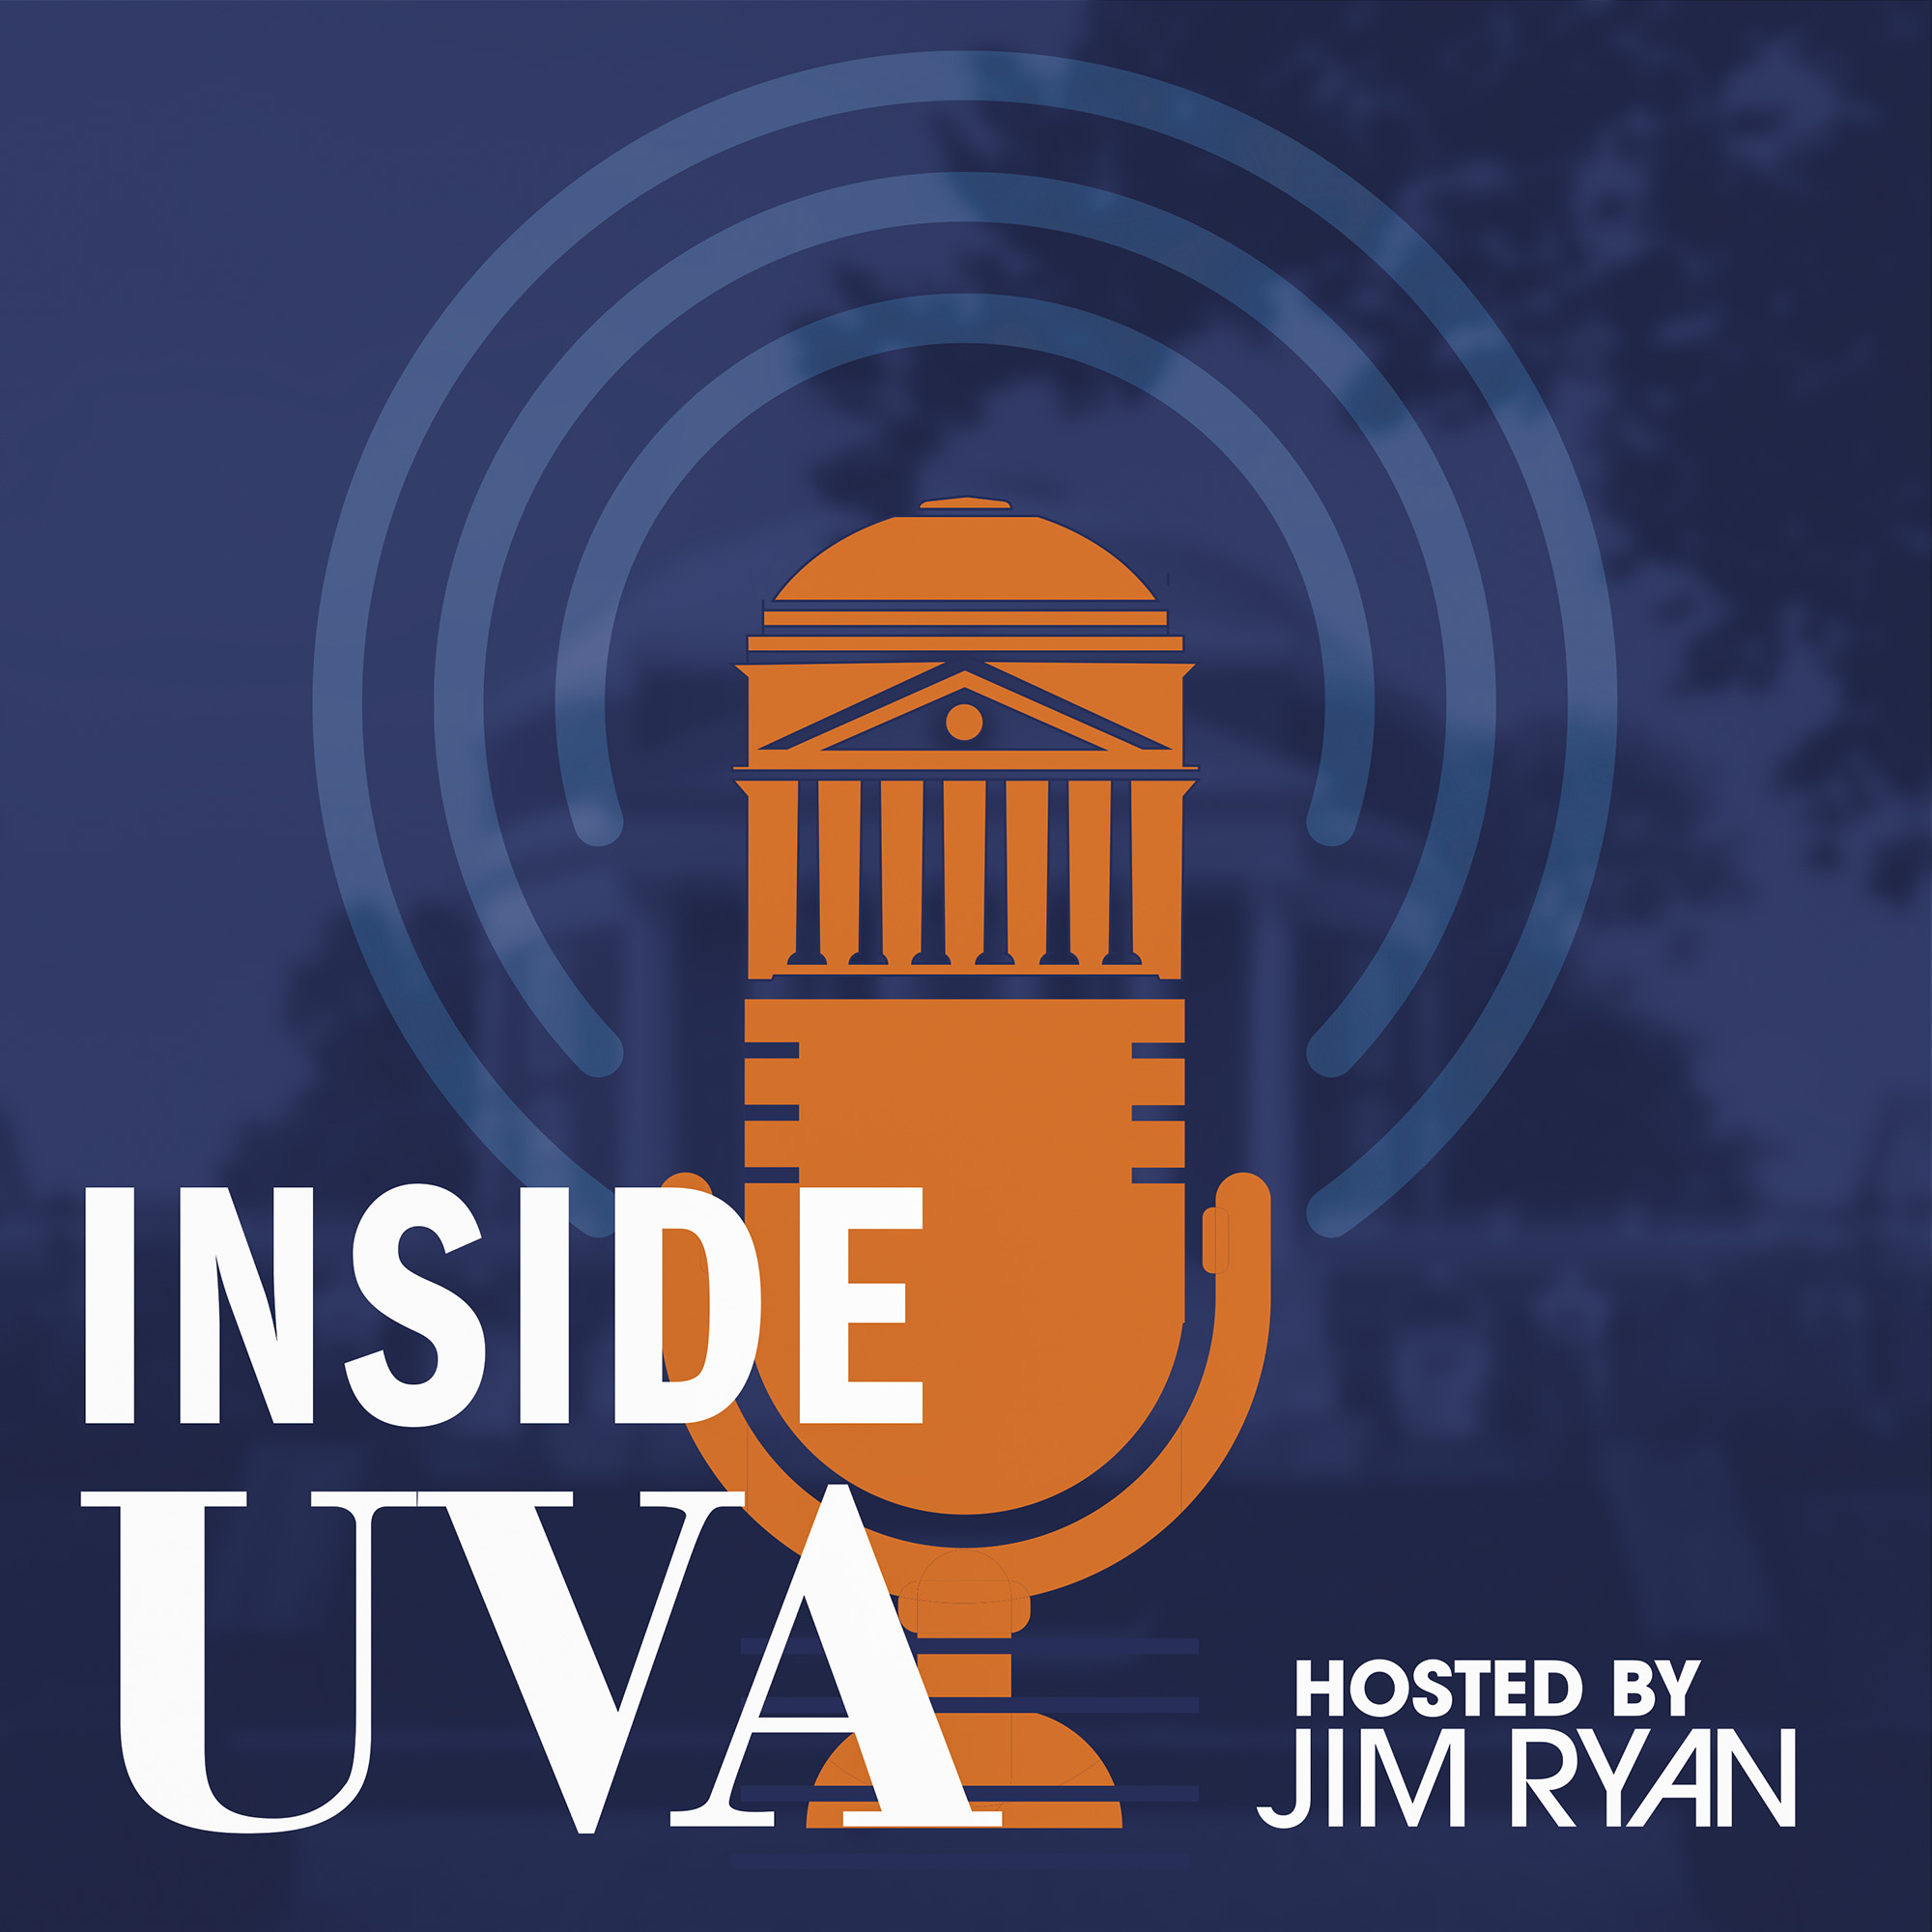 ‘Inside UVA’ Hosted by Jim Ryan